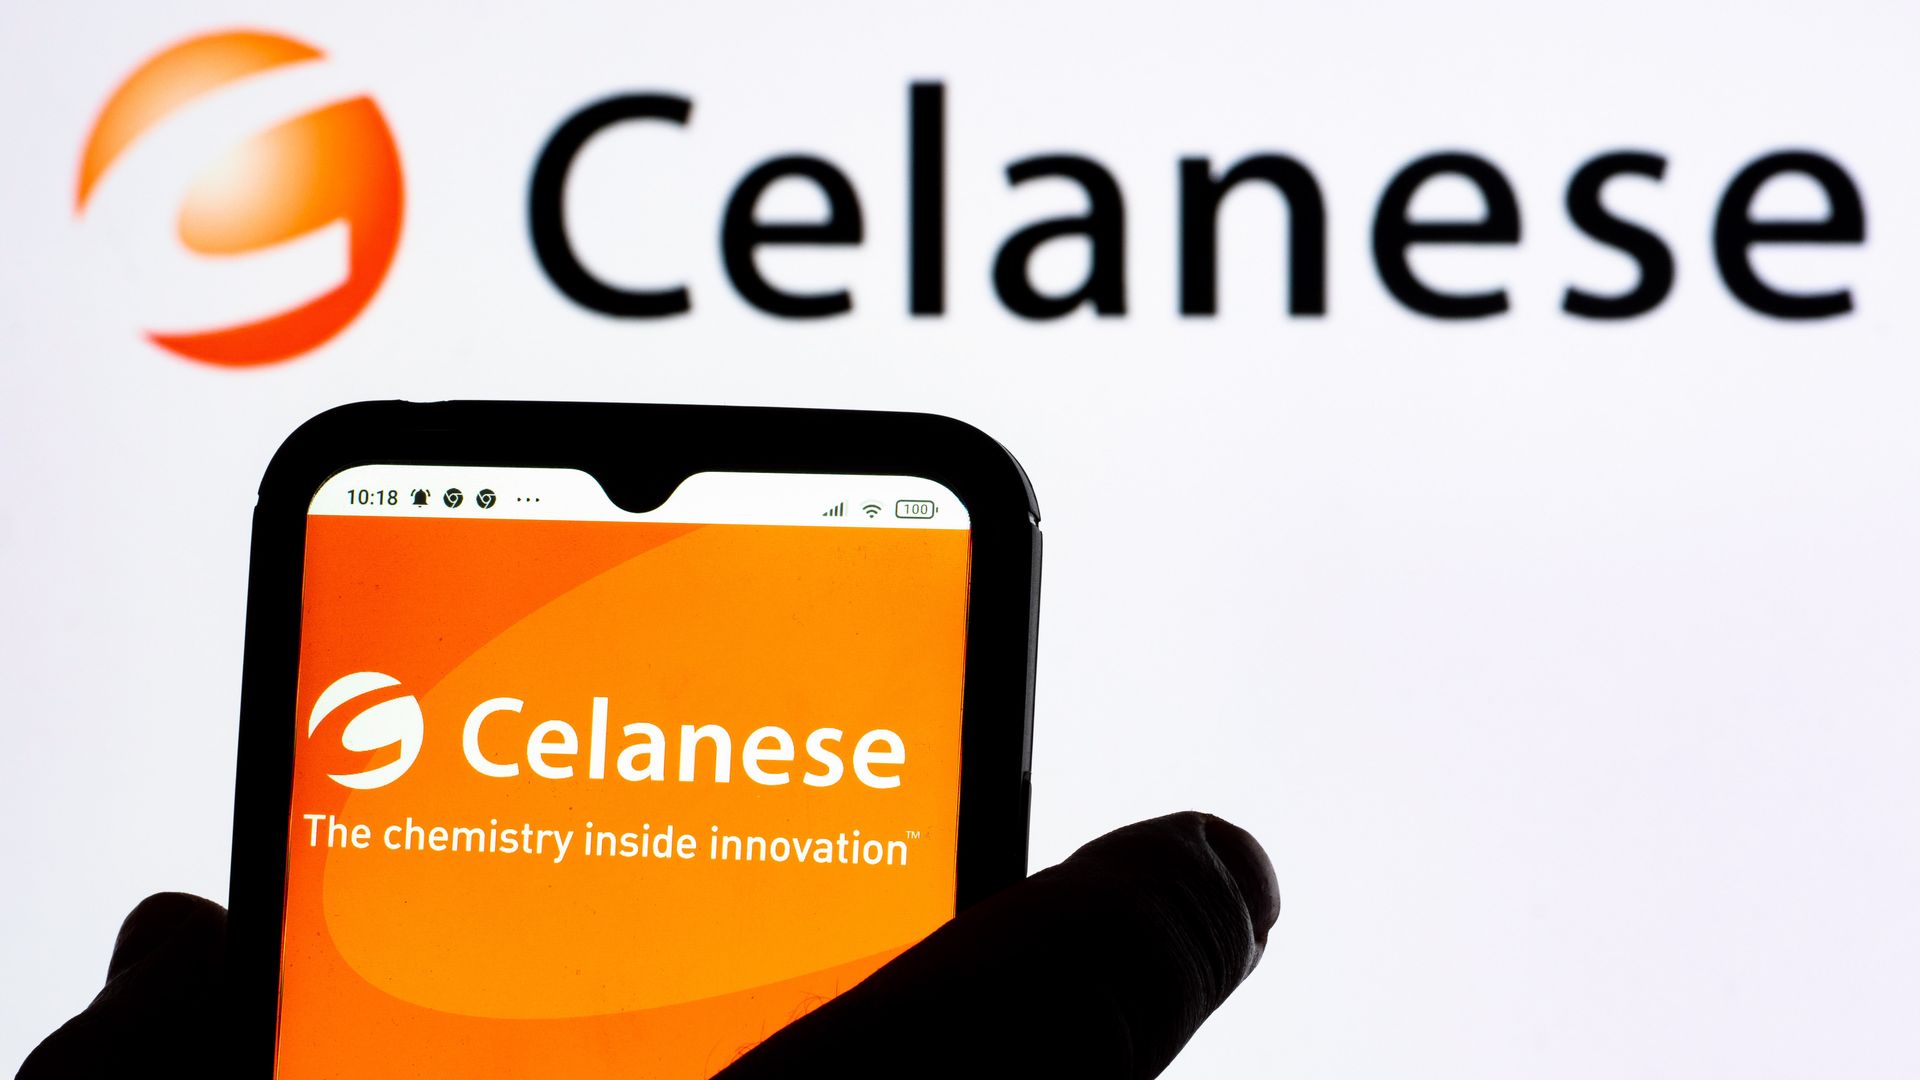 The Celanese logo